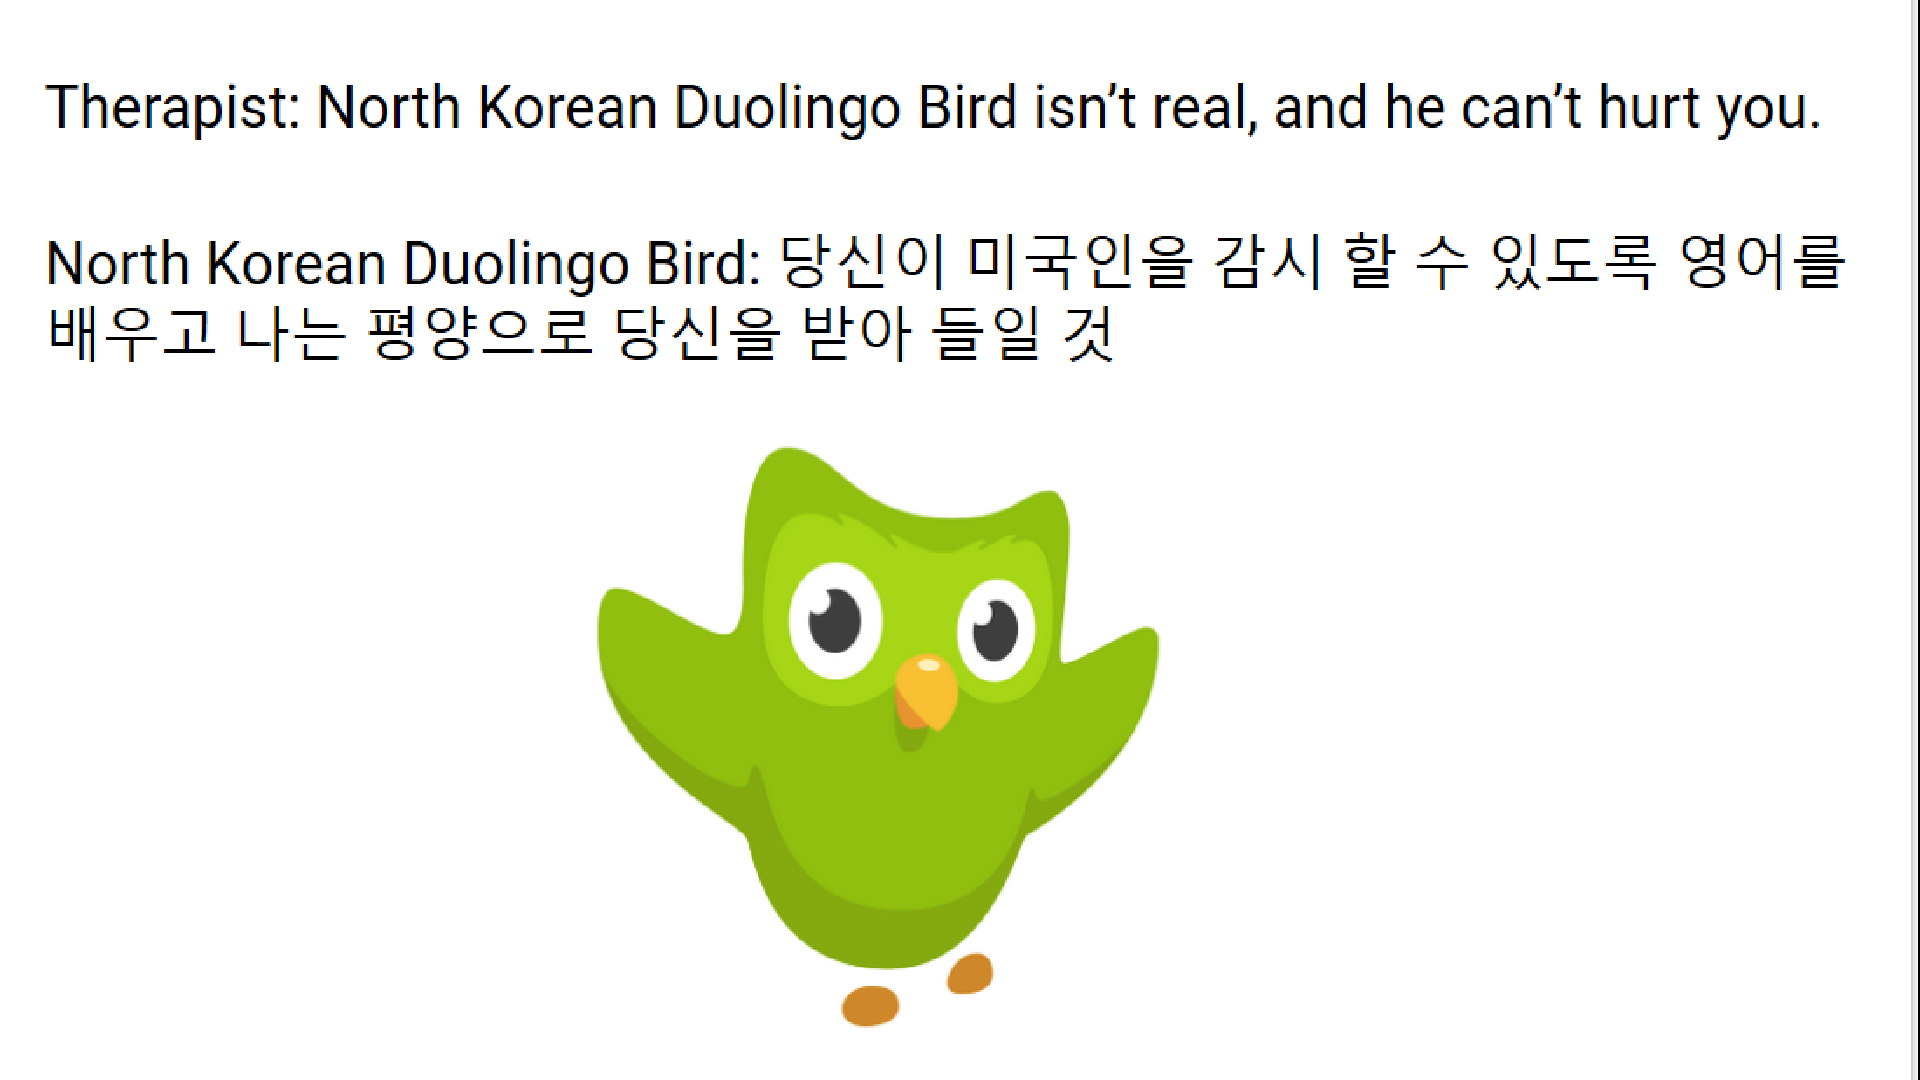 North Korean Duolingo Bird